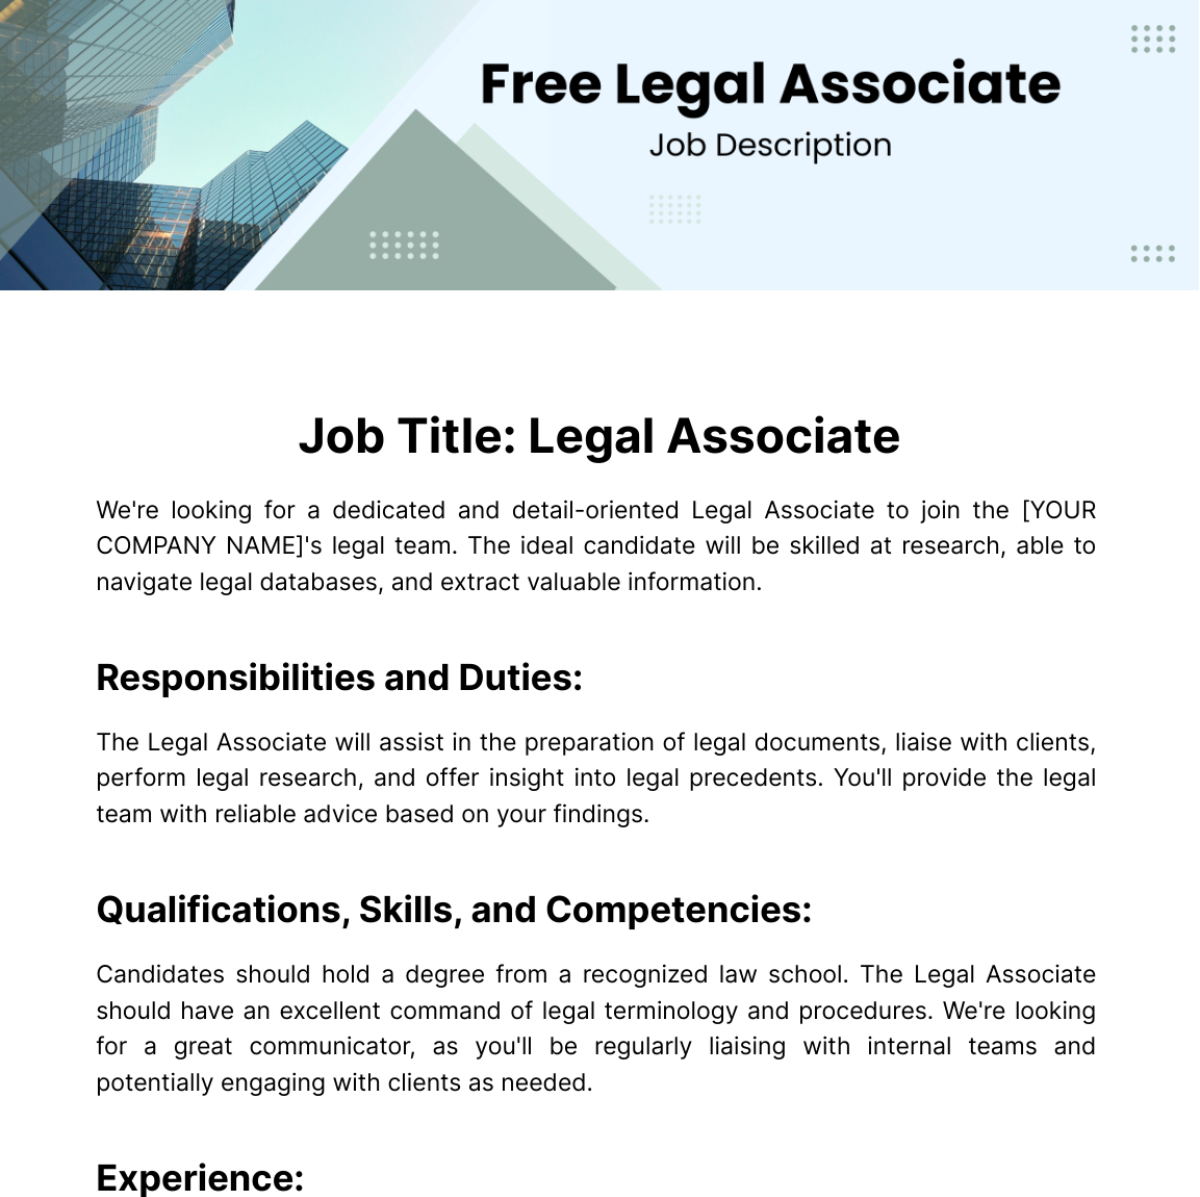 Free Legal Associate Job Description Template